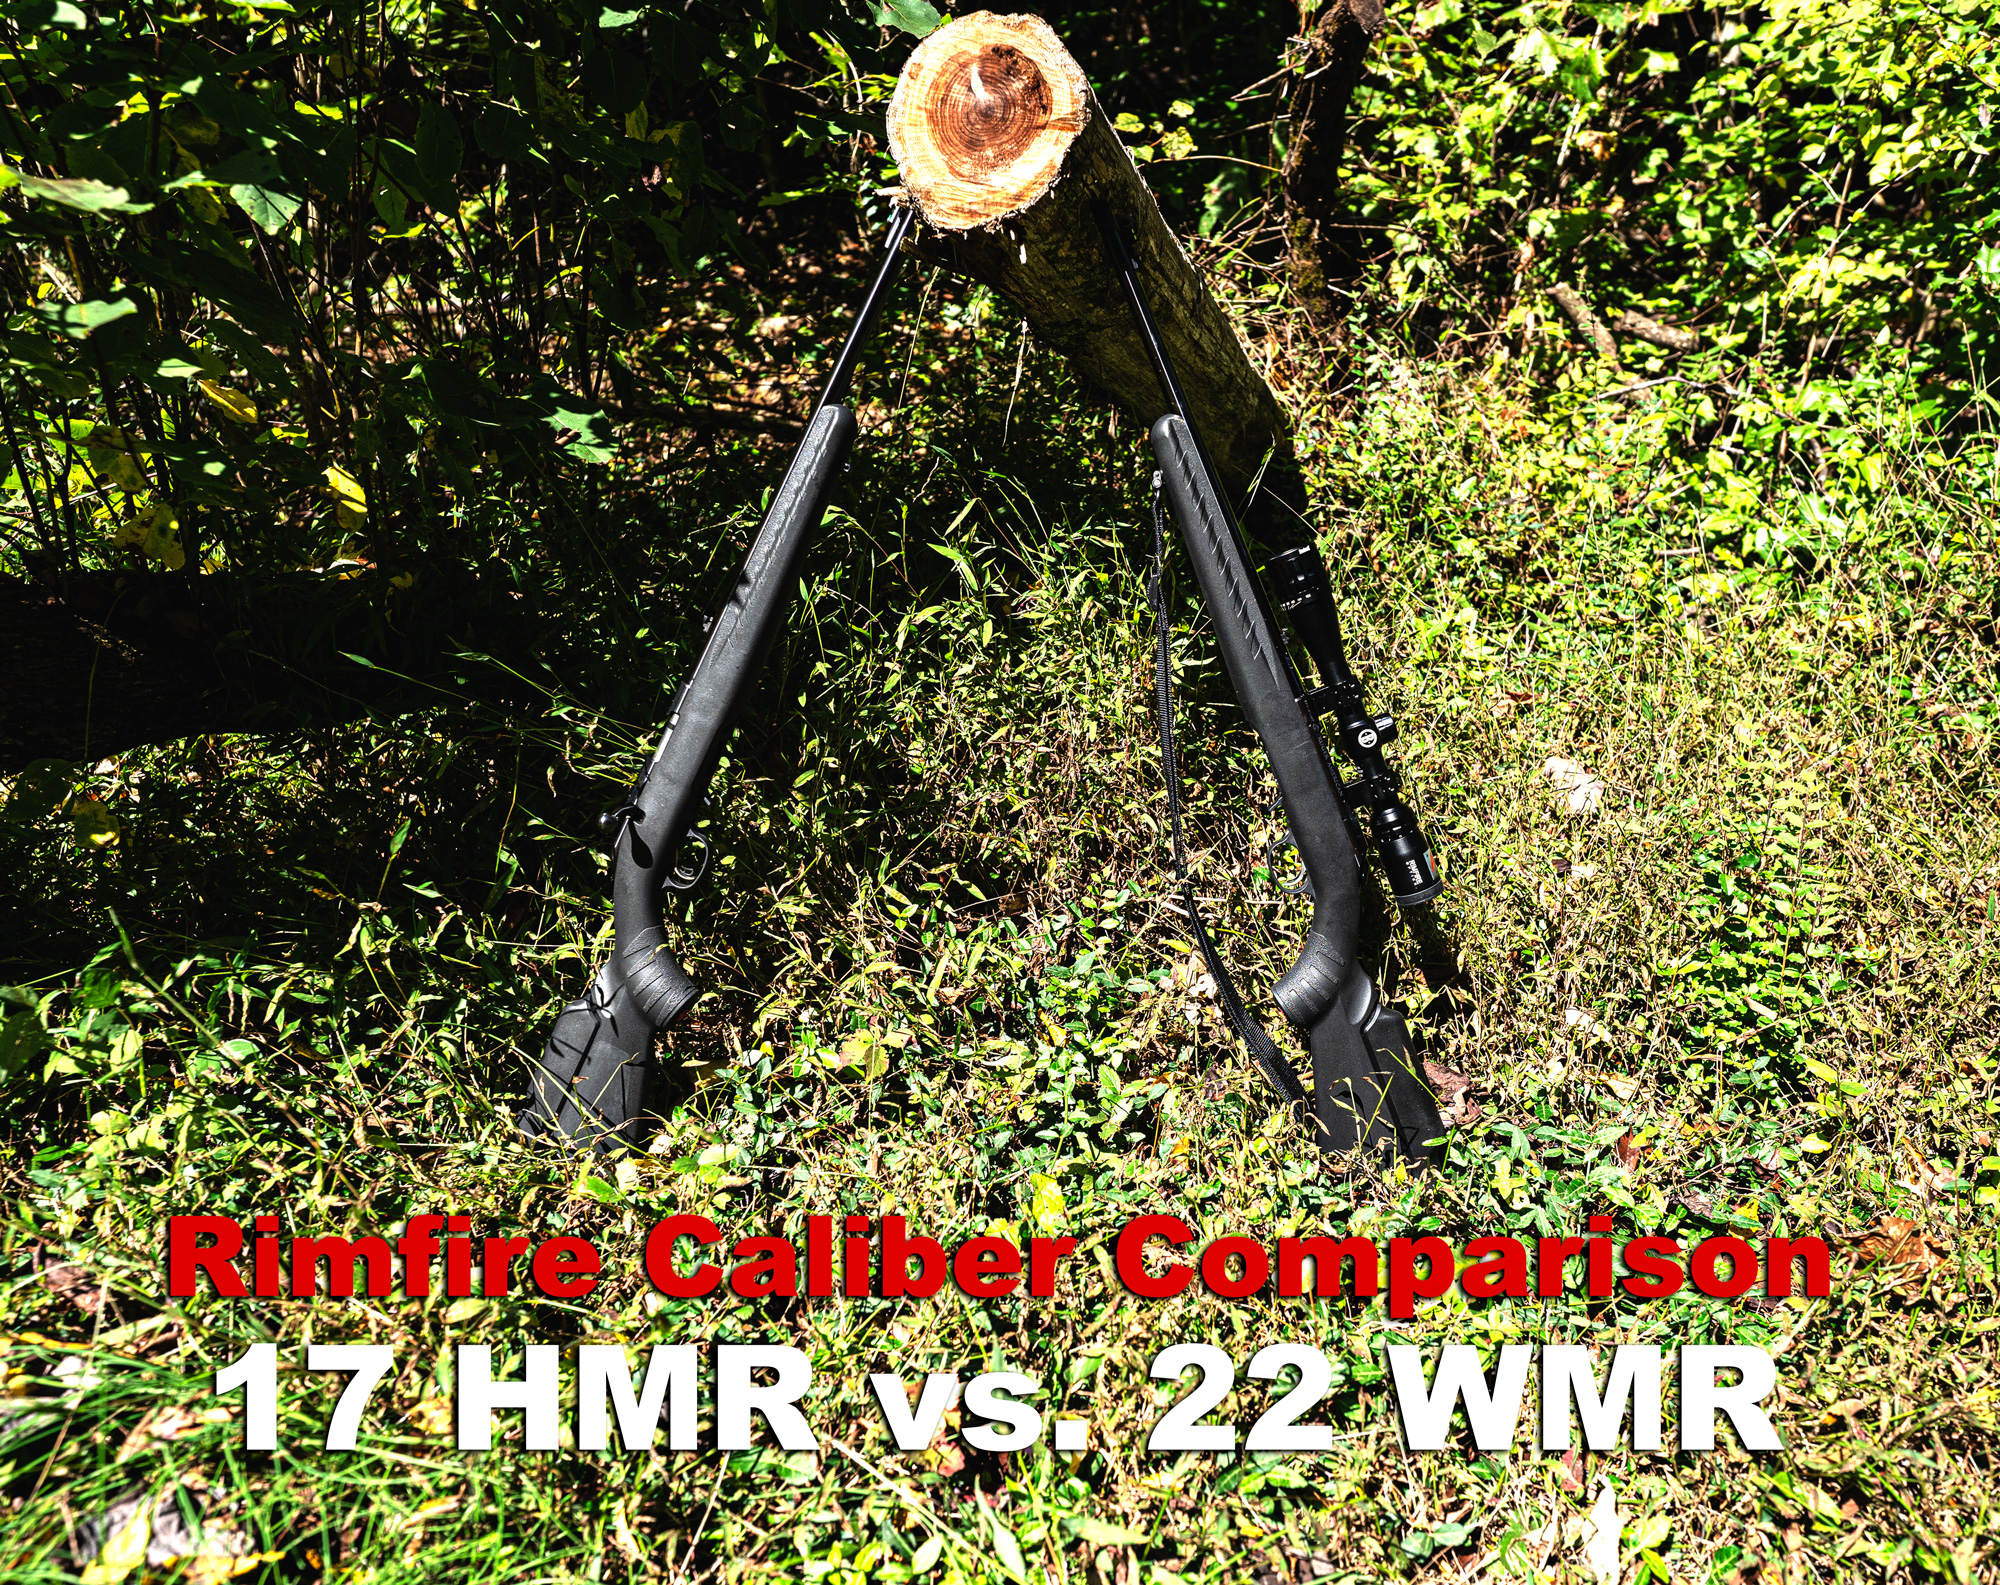 17 HMR vs 22 WMR rifles at a shooting range against a tree